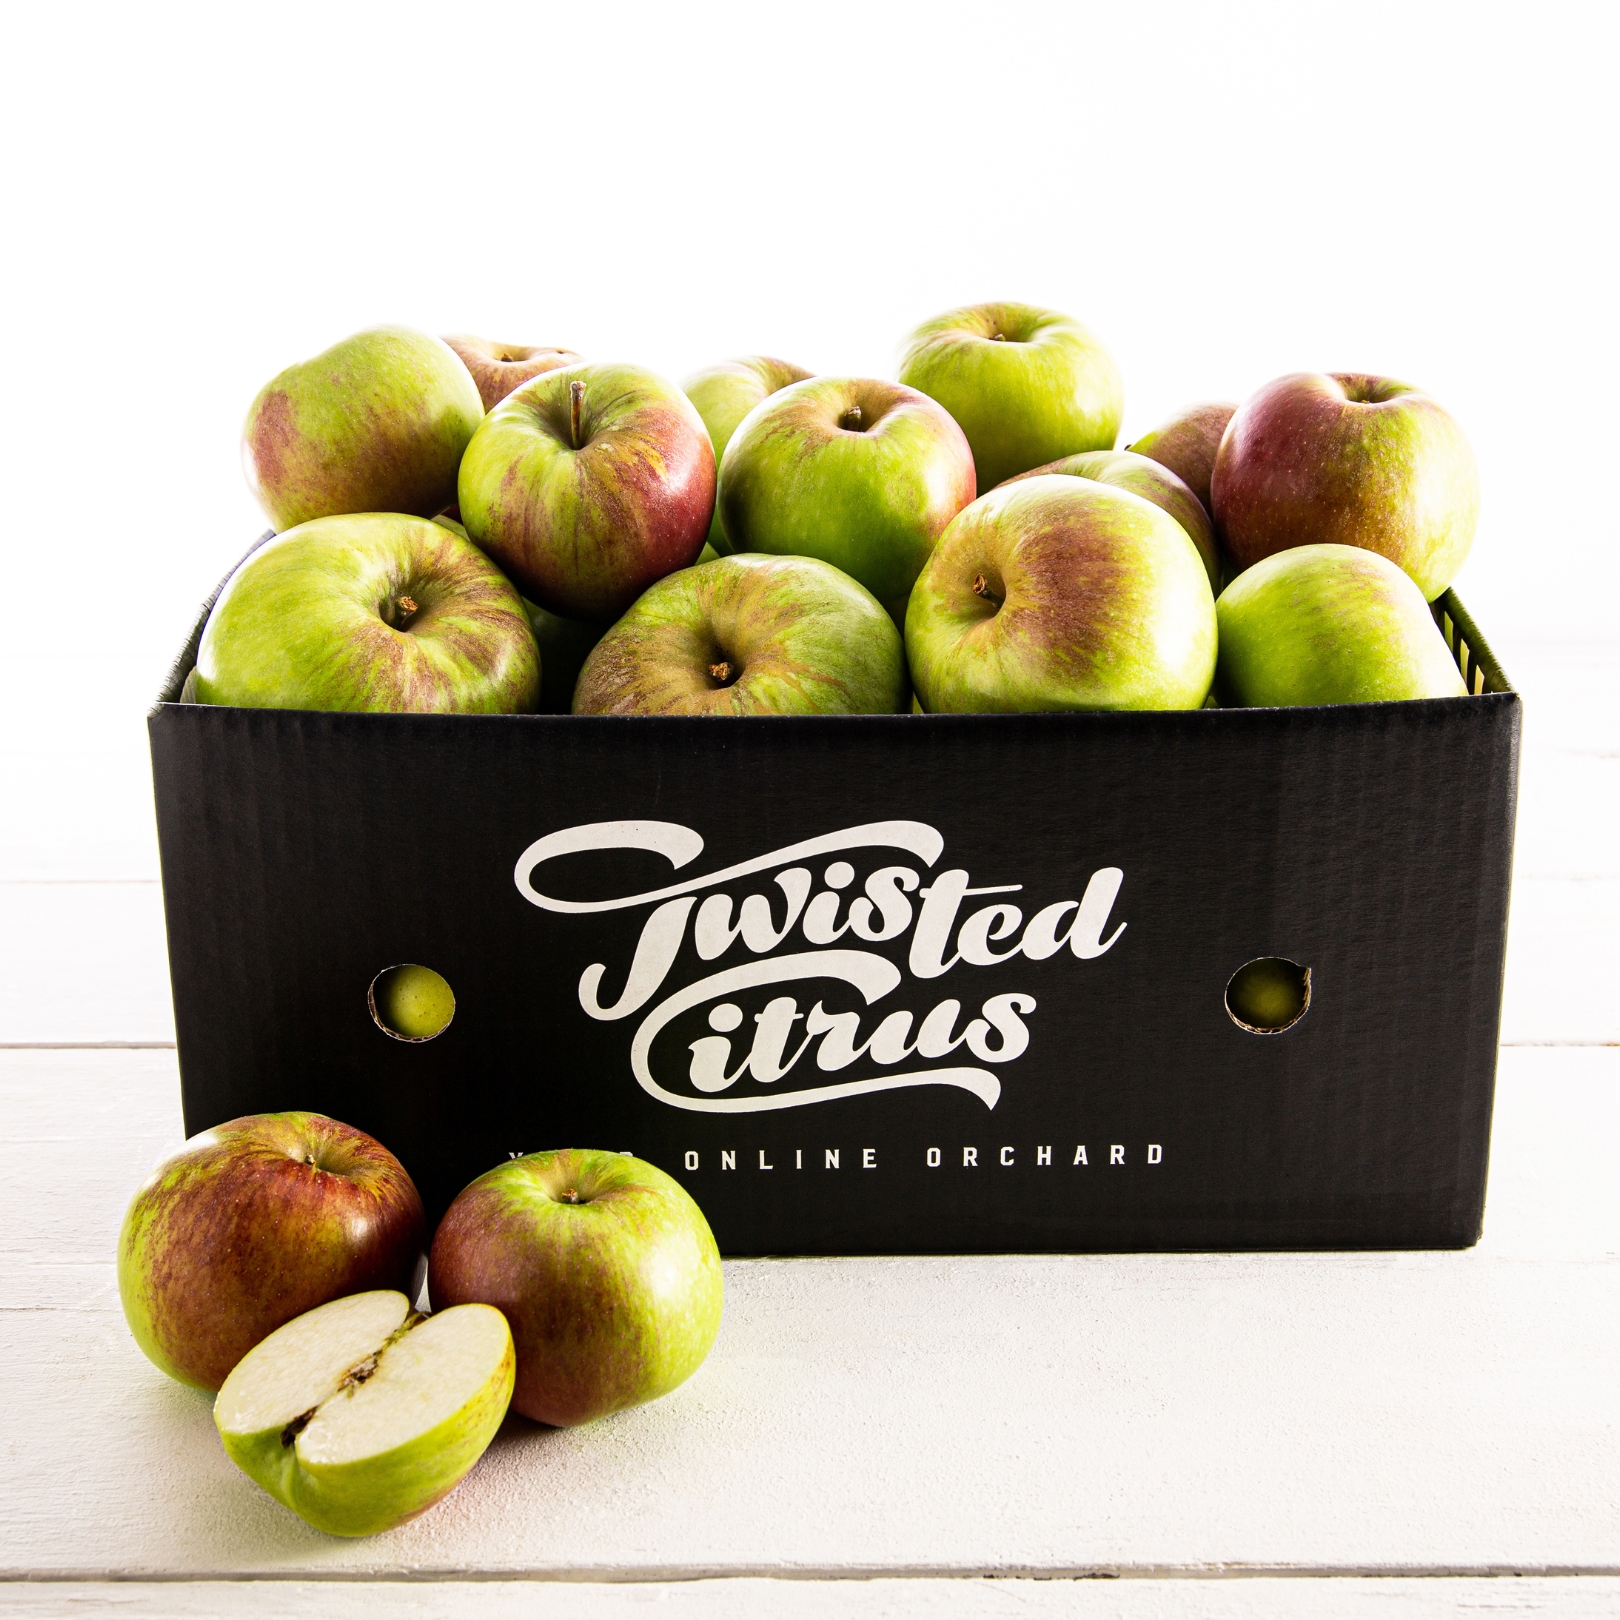 Apples - Ballarat fruit box delivery nz